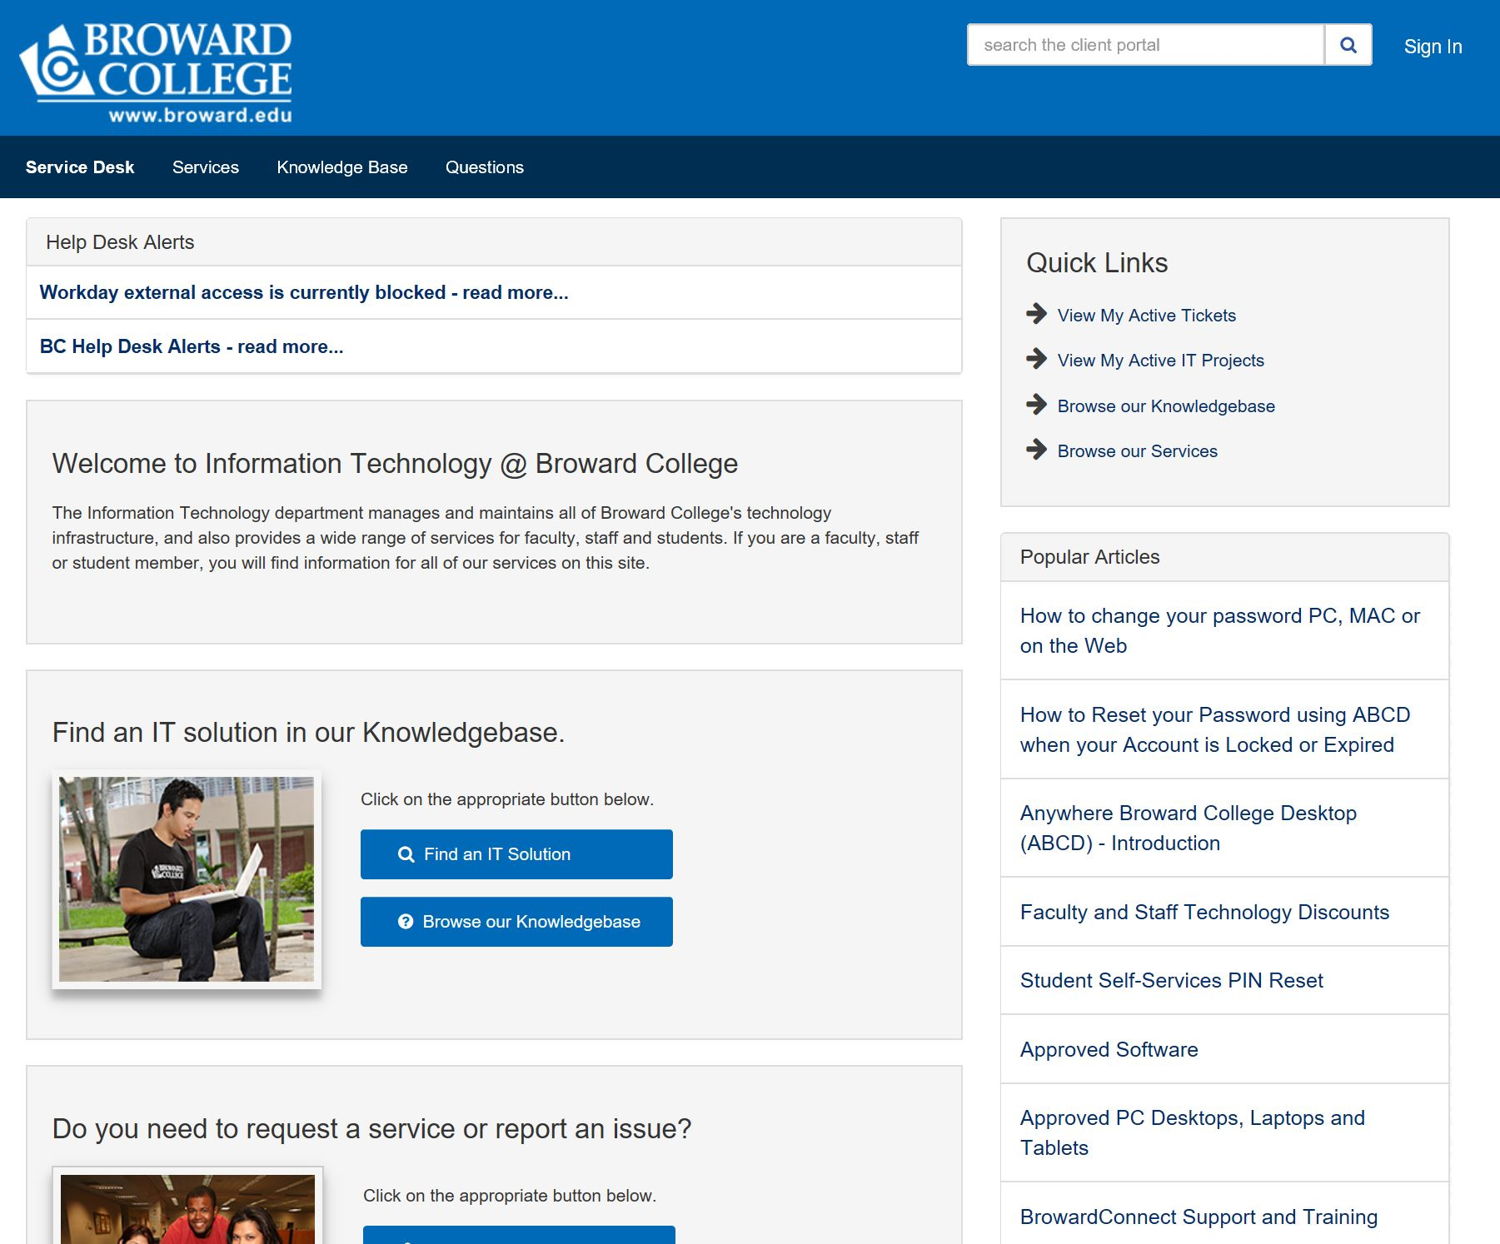 Broward College's Service Portal through TeamDynamix https://helpdesk.broward.edu/TDClient/Home/